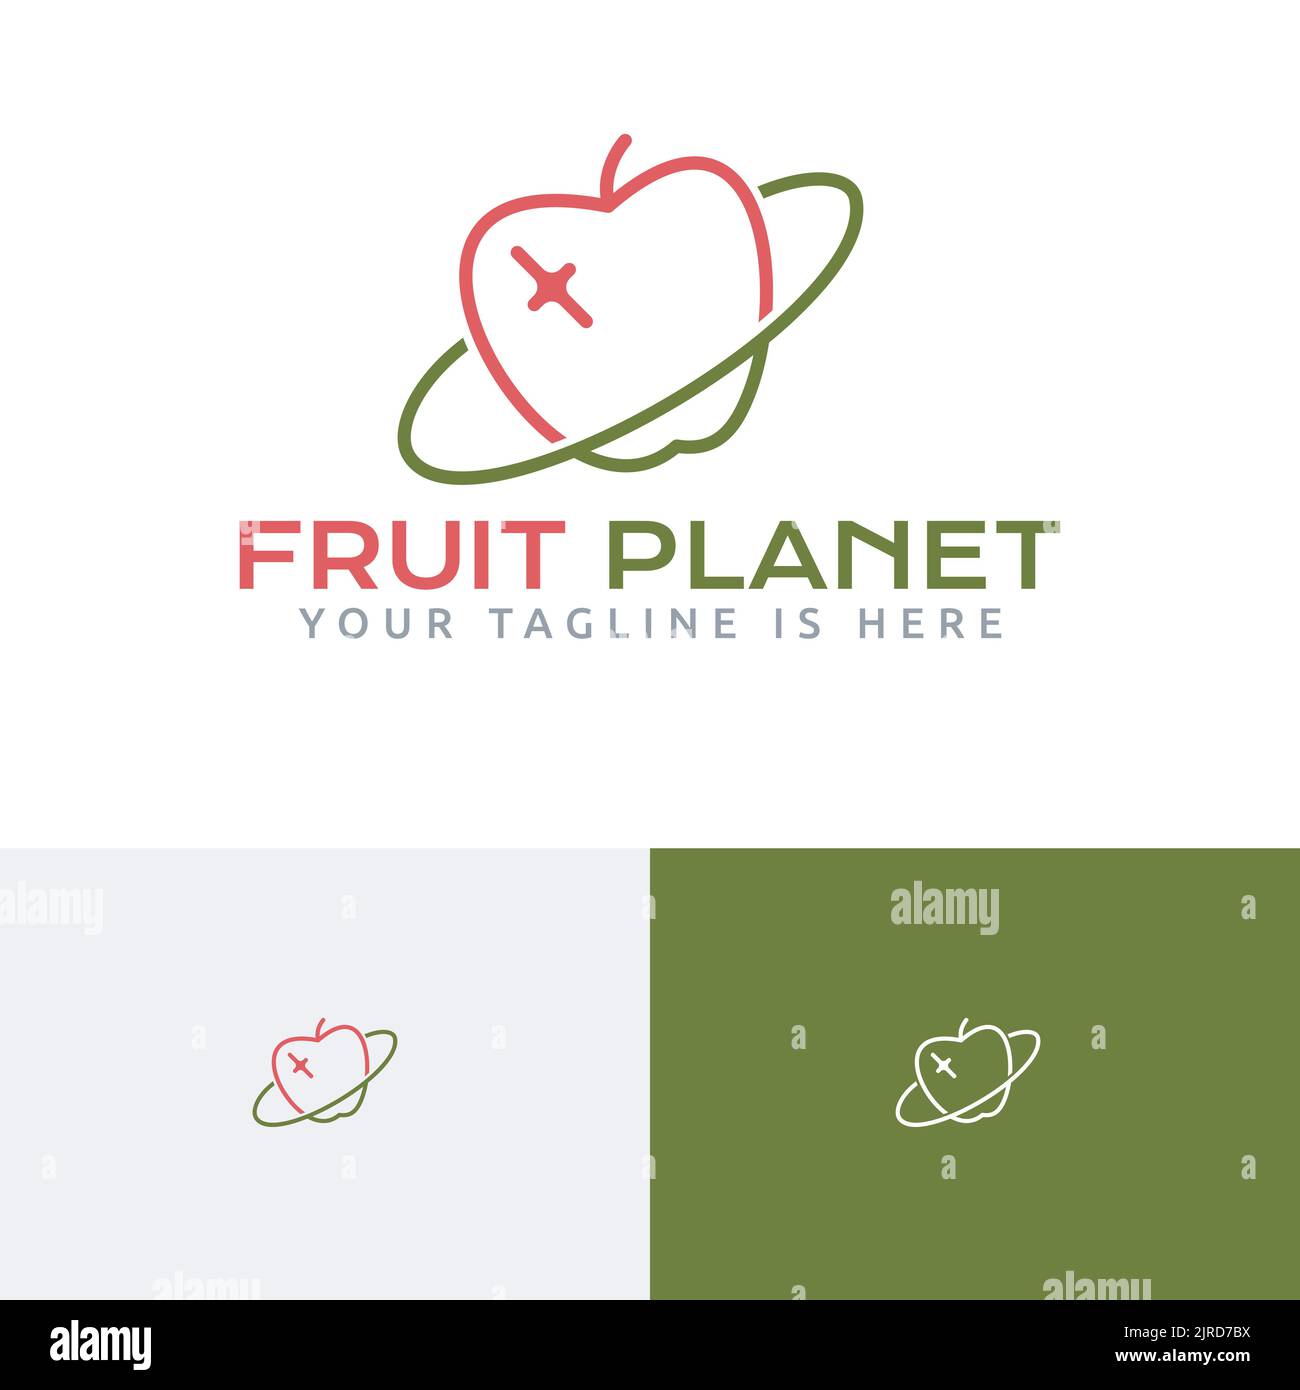 Fruit Planet Apple Star Unique Monoline Logo Stock Vector